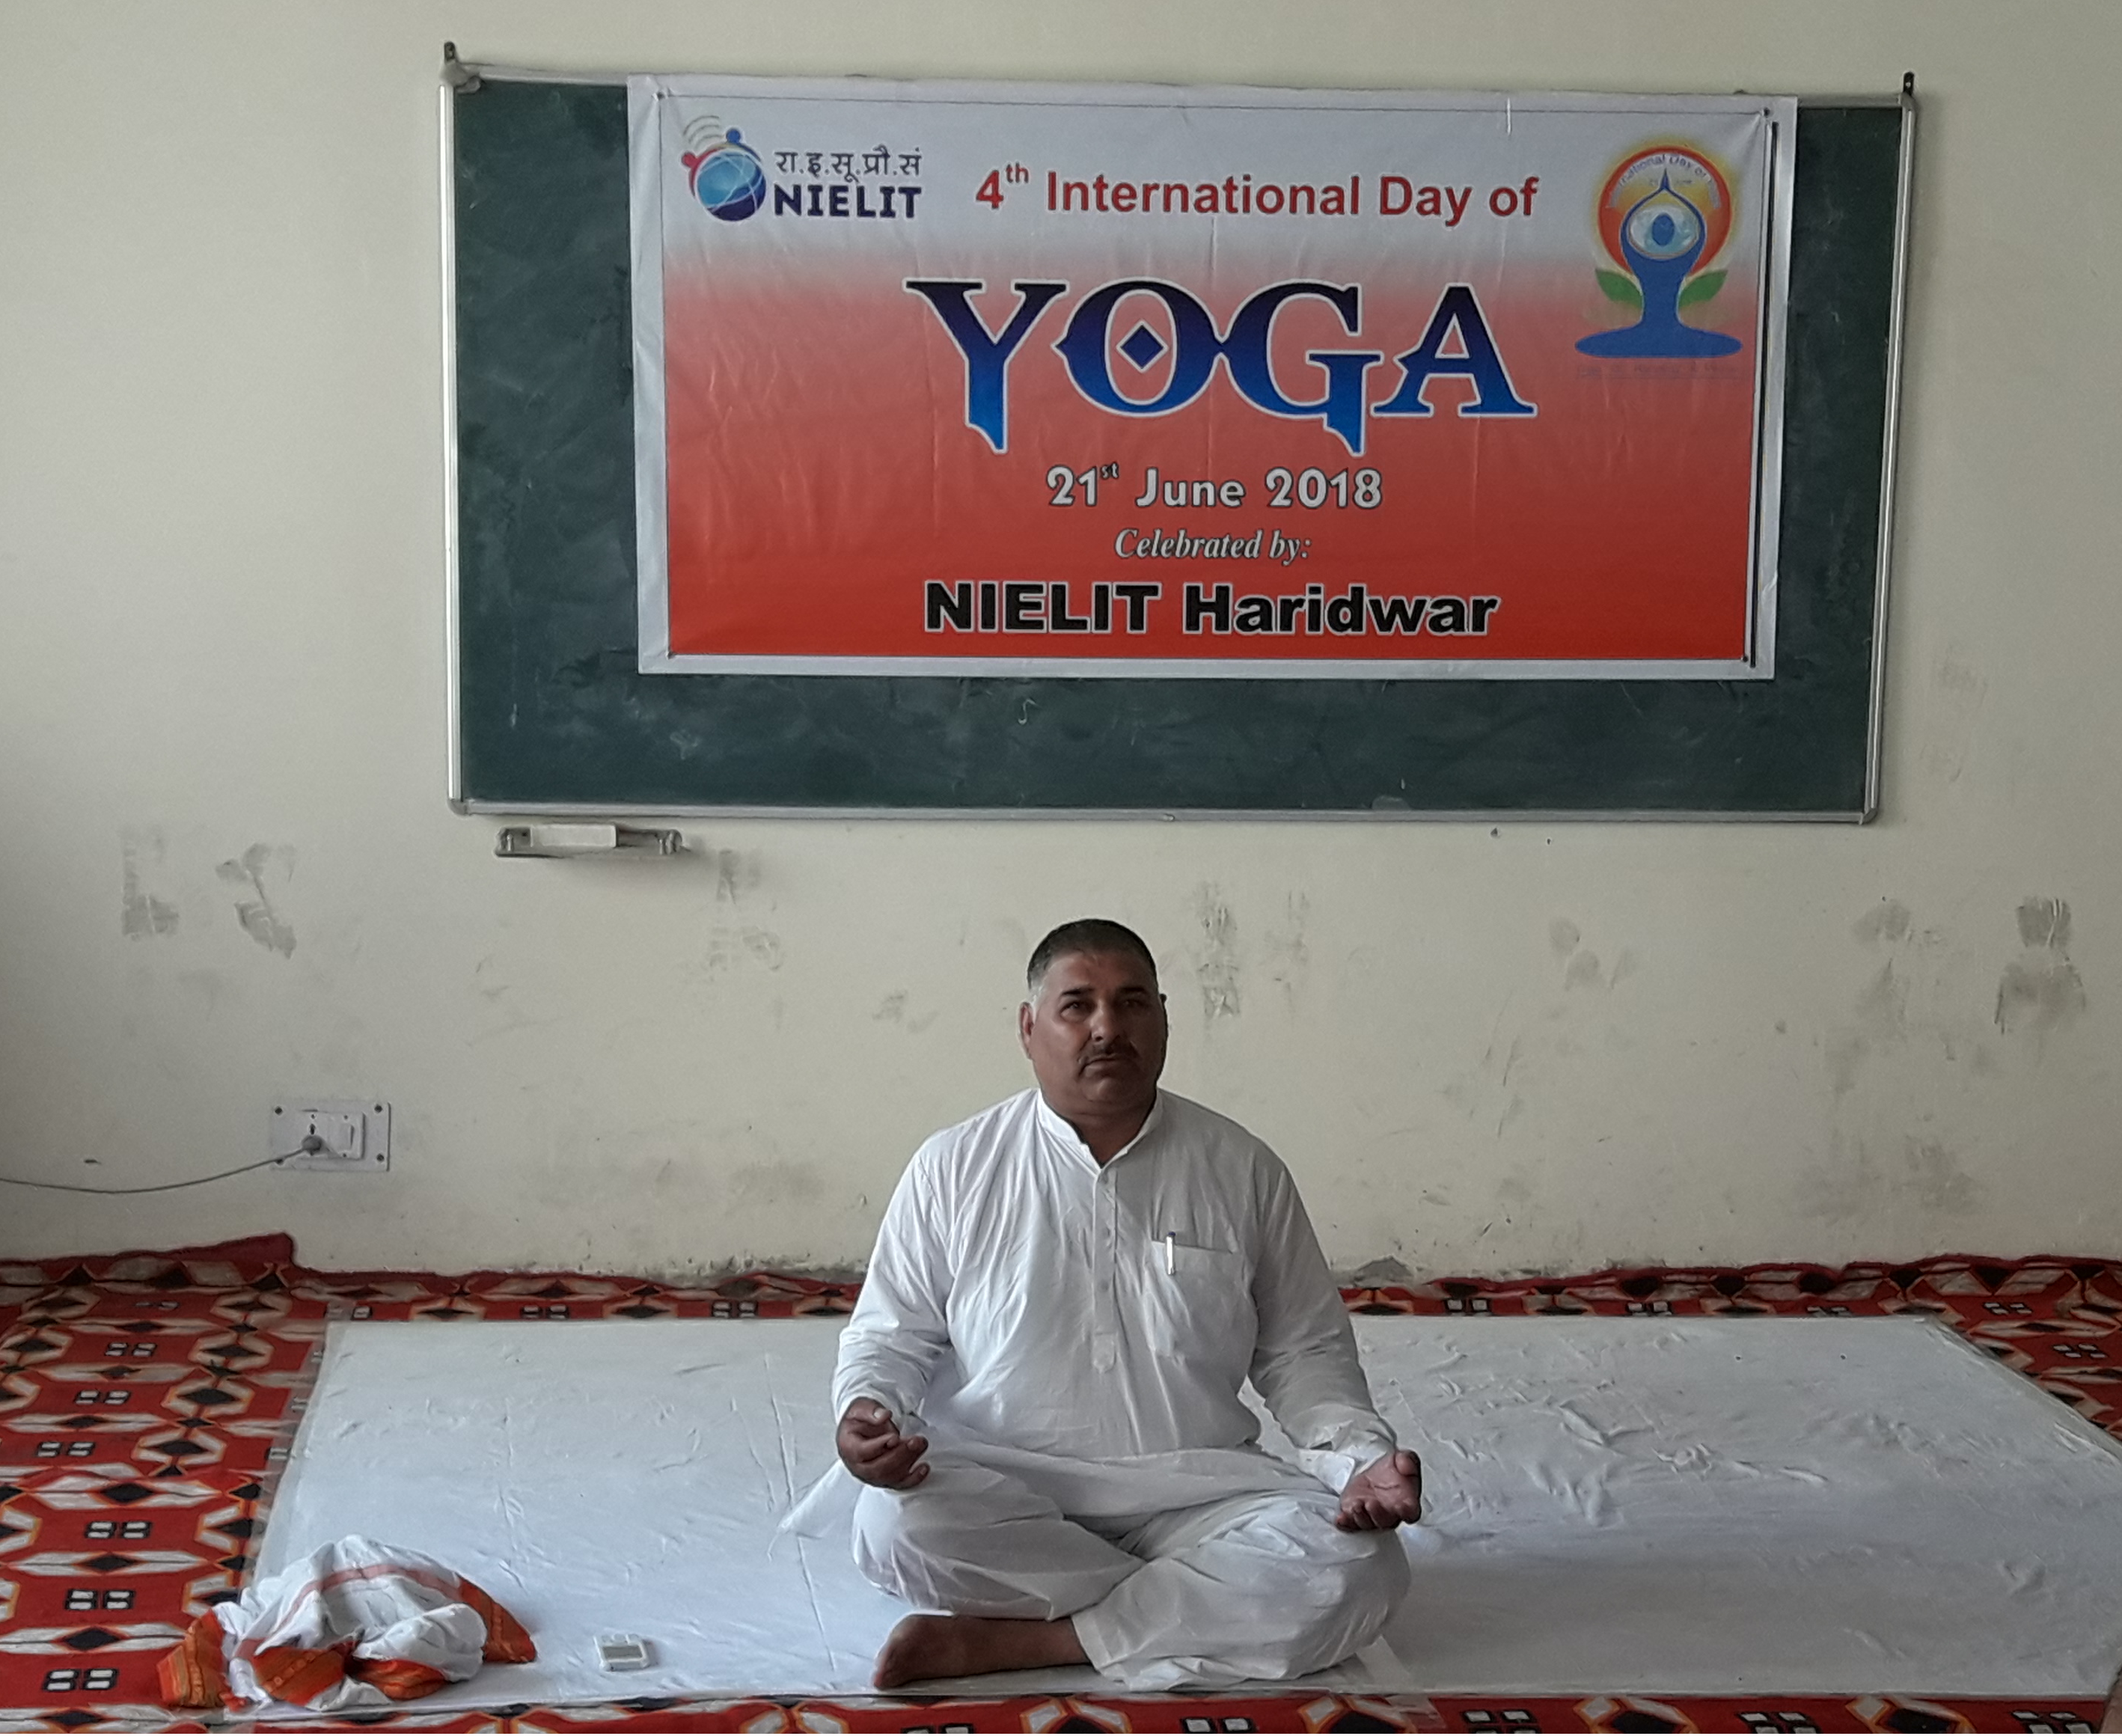 4th International Day of Yoga June 21, 2018